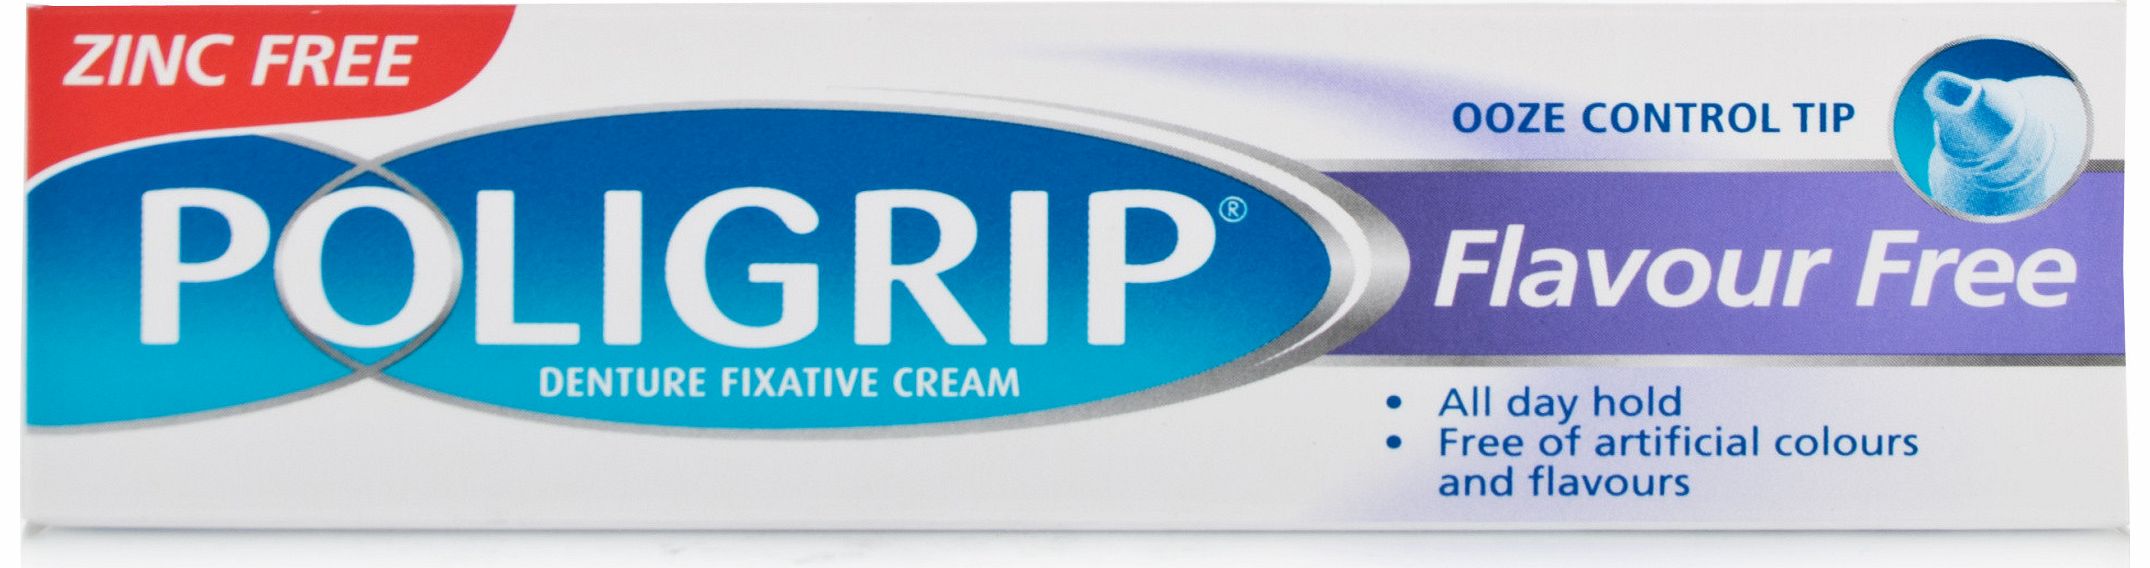 Denture Fixative Cream Flavour Free